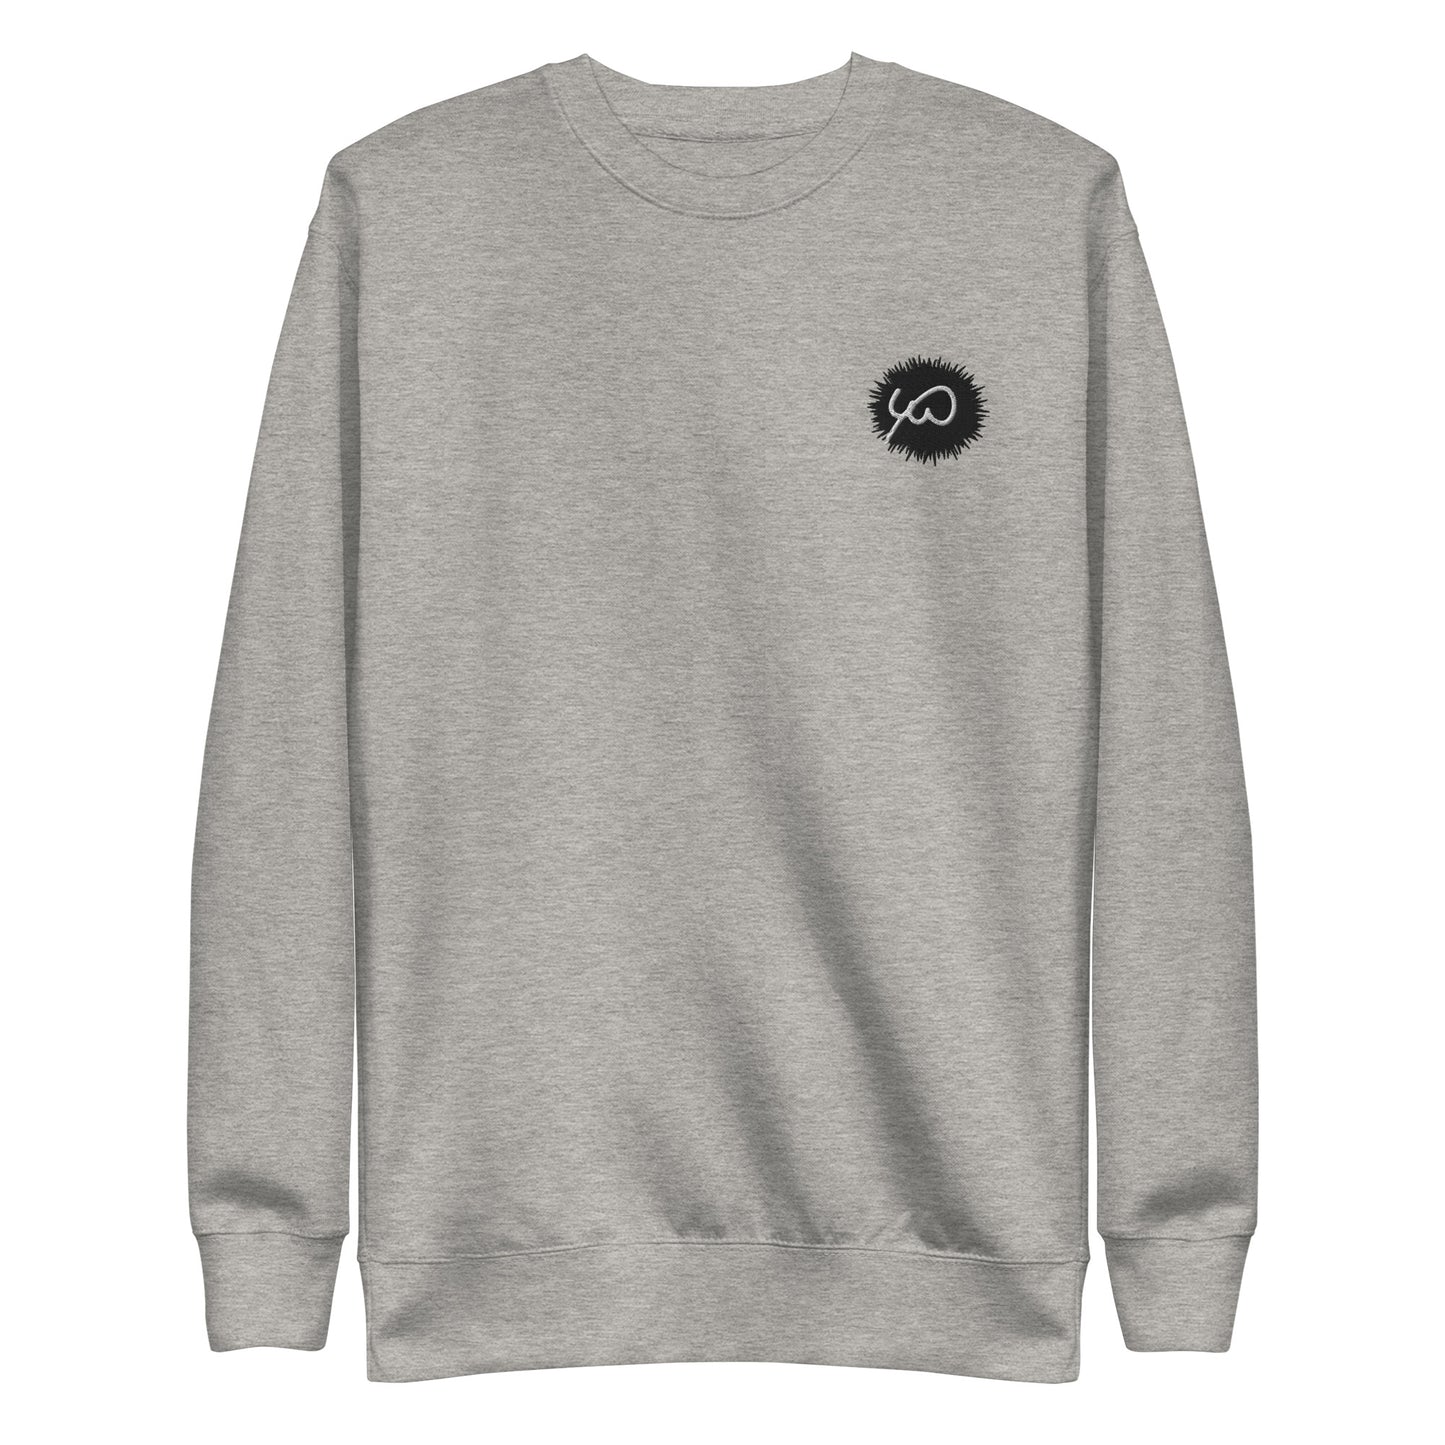 Light Gray Unisex Premium Sweatshirt -Front design with Black and White Embroidery of Uniwari Logo